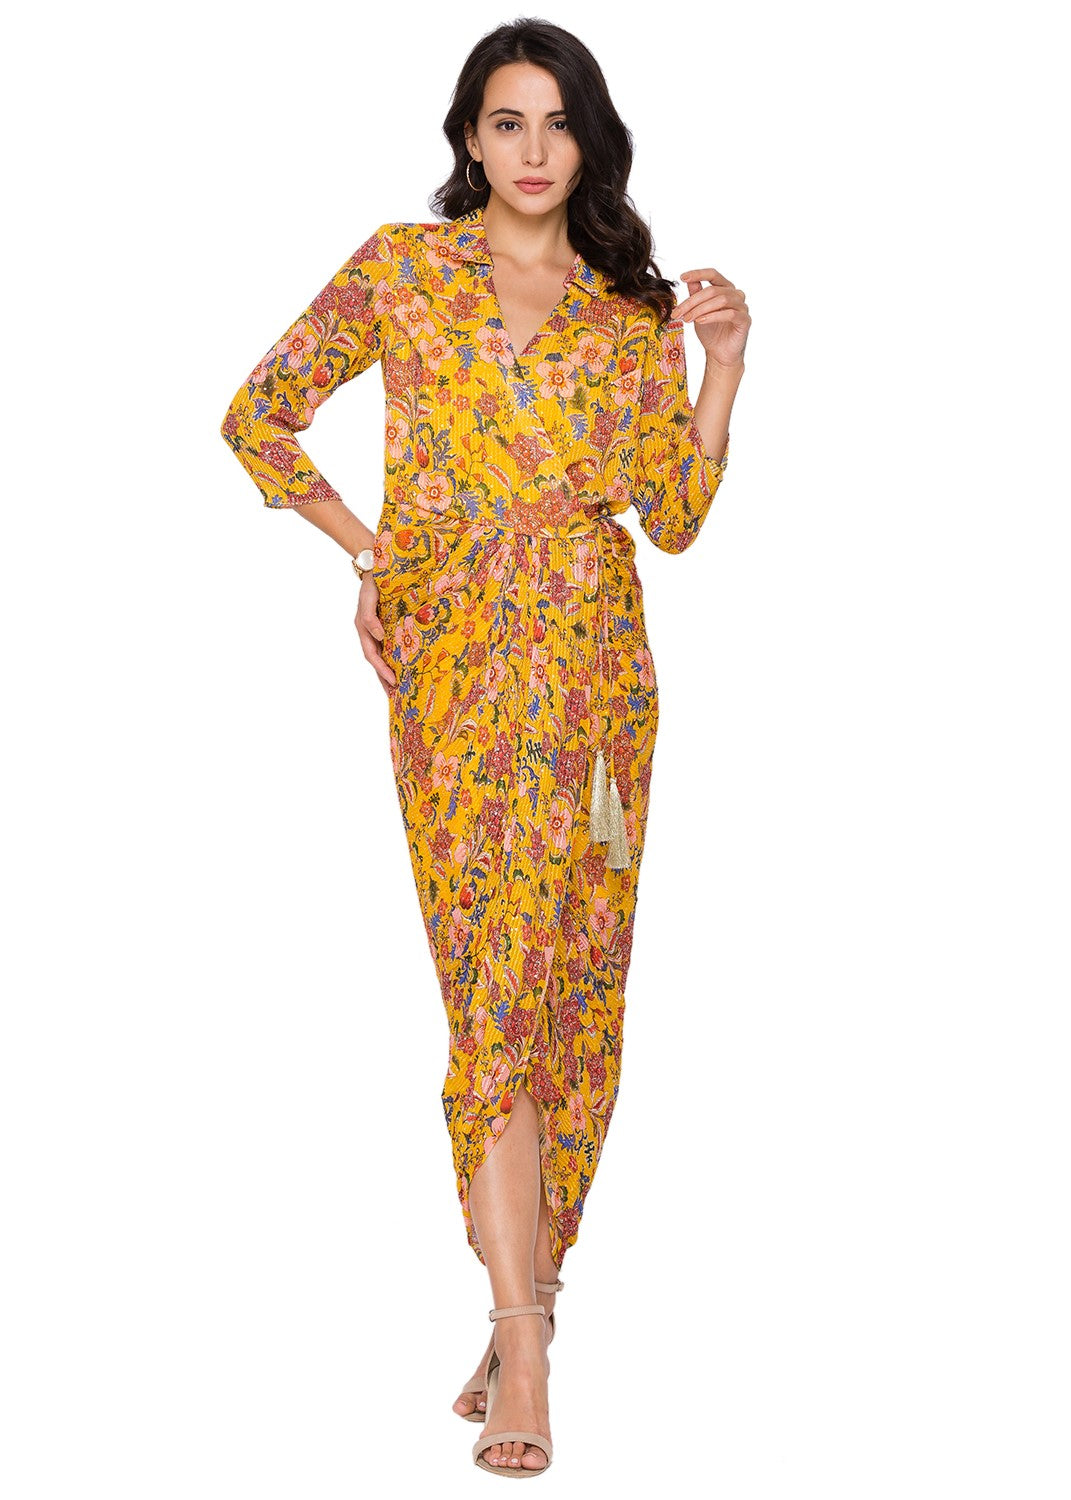 sougat paul Overlap Sequence Printed Drape Dress yellow fusion western online shopping melange singapore indian designer wear